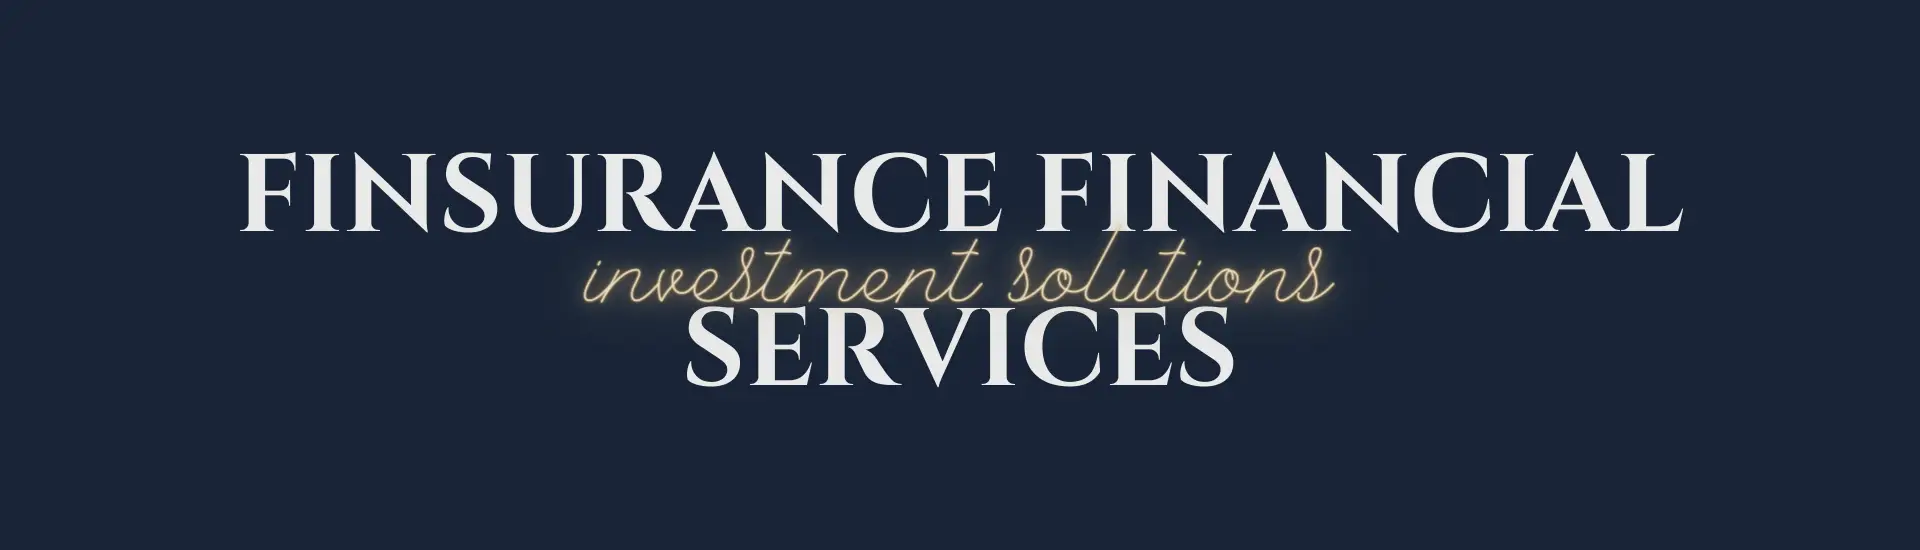 finsurance financial services logo